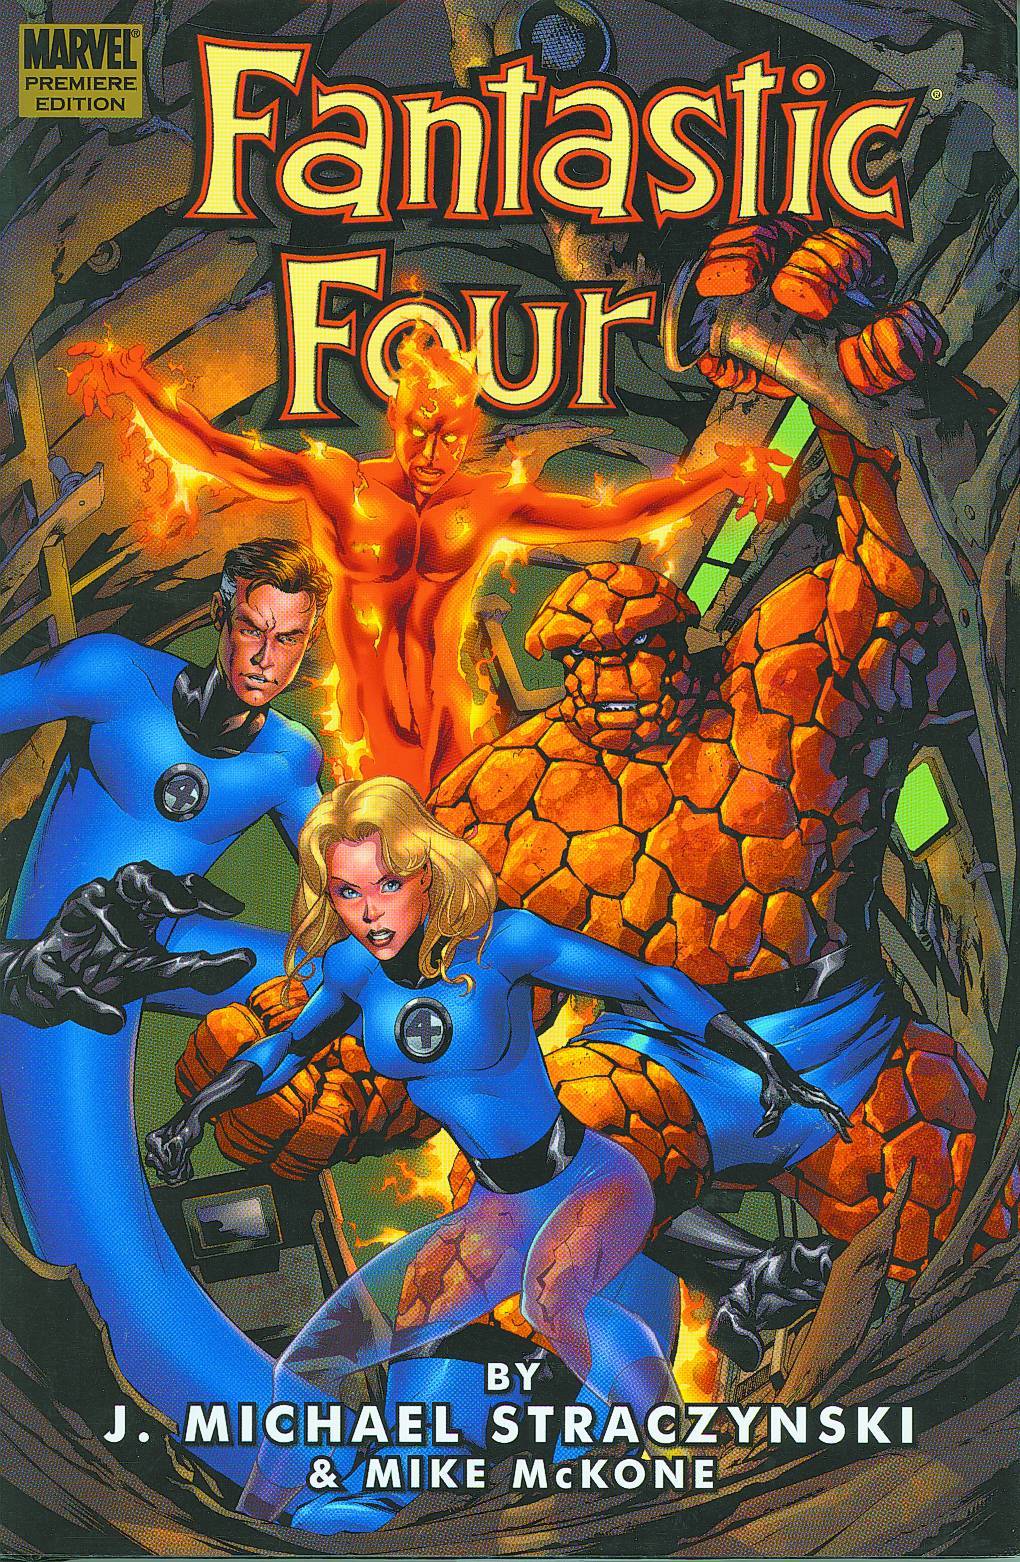 Fantastic Four by J Michael Straczynski Hardcover Volume 1